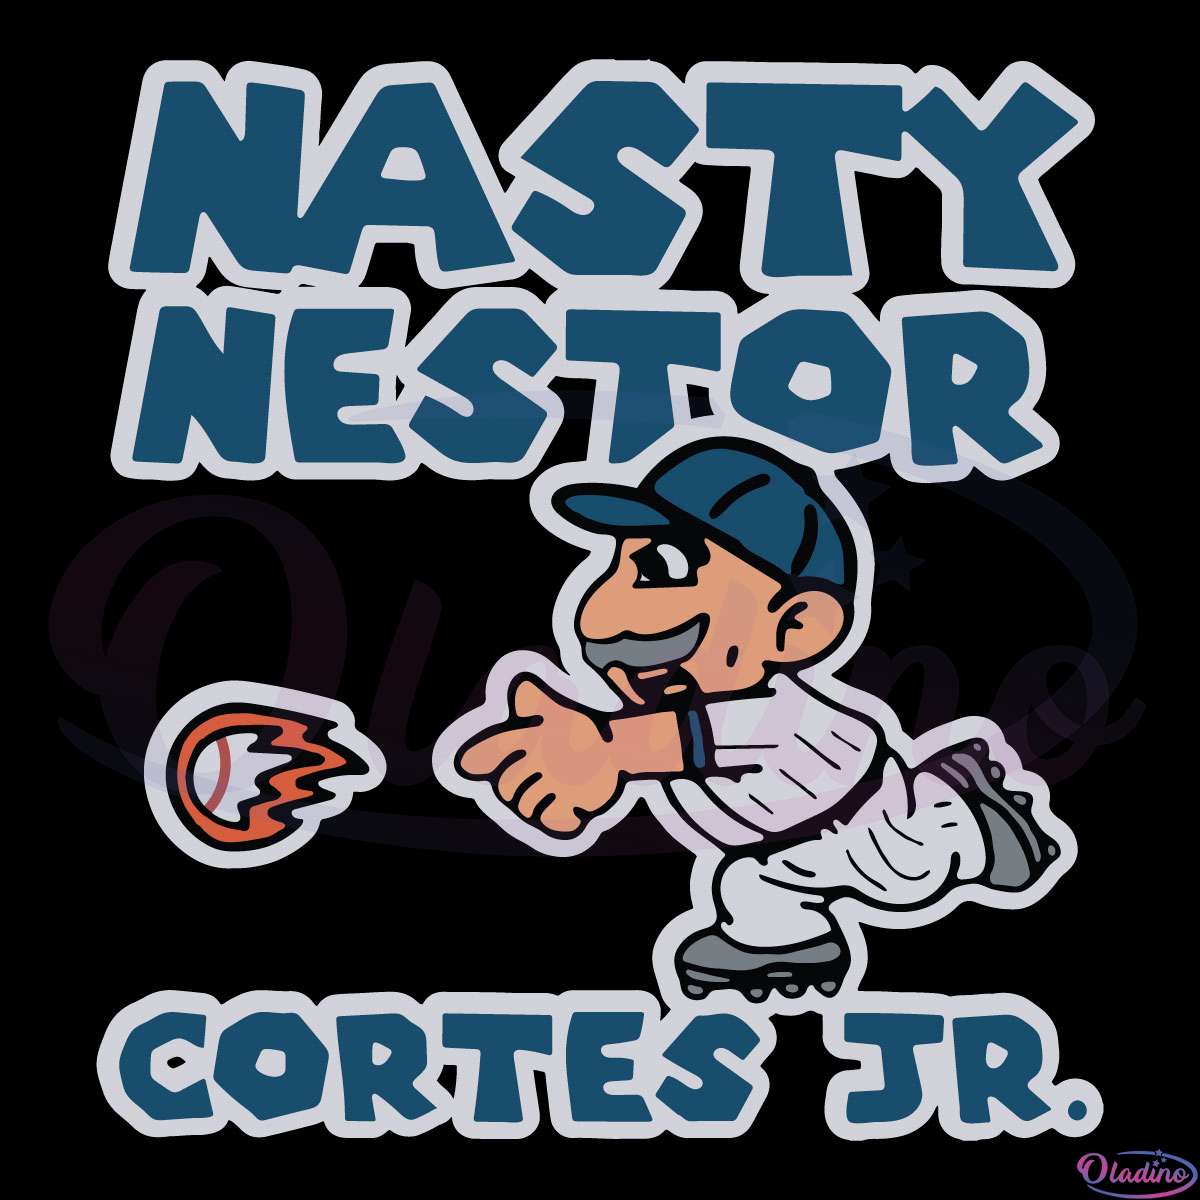 nestor cortes shirt night